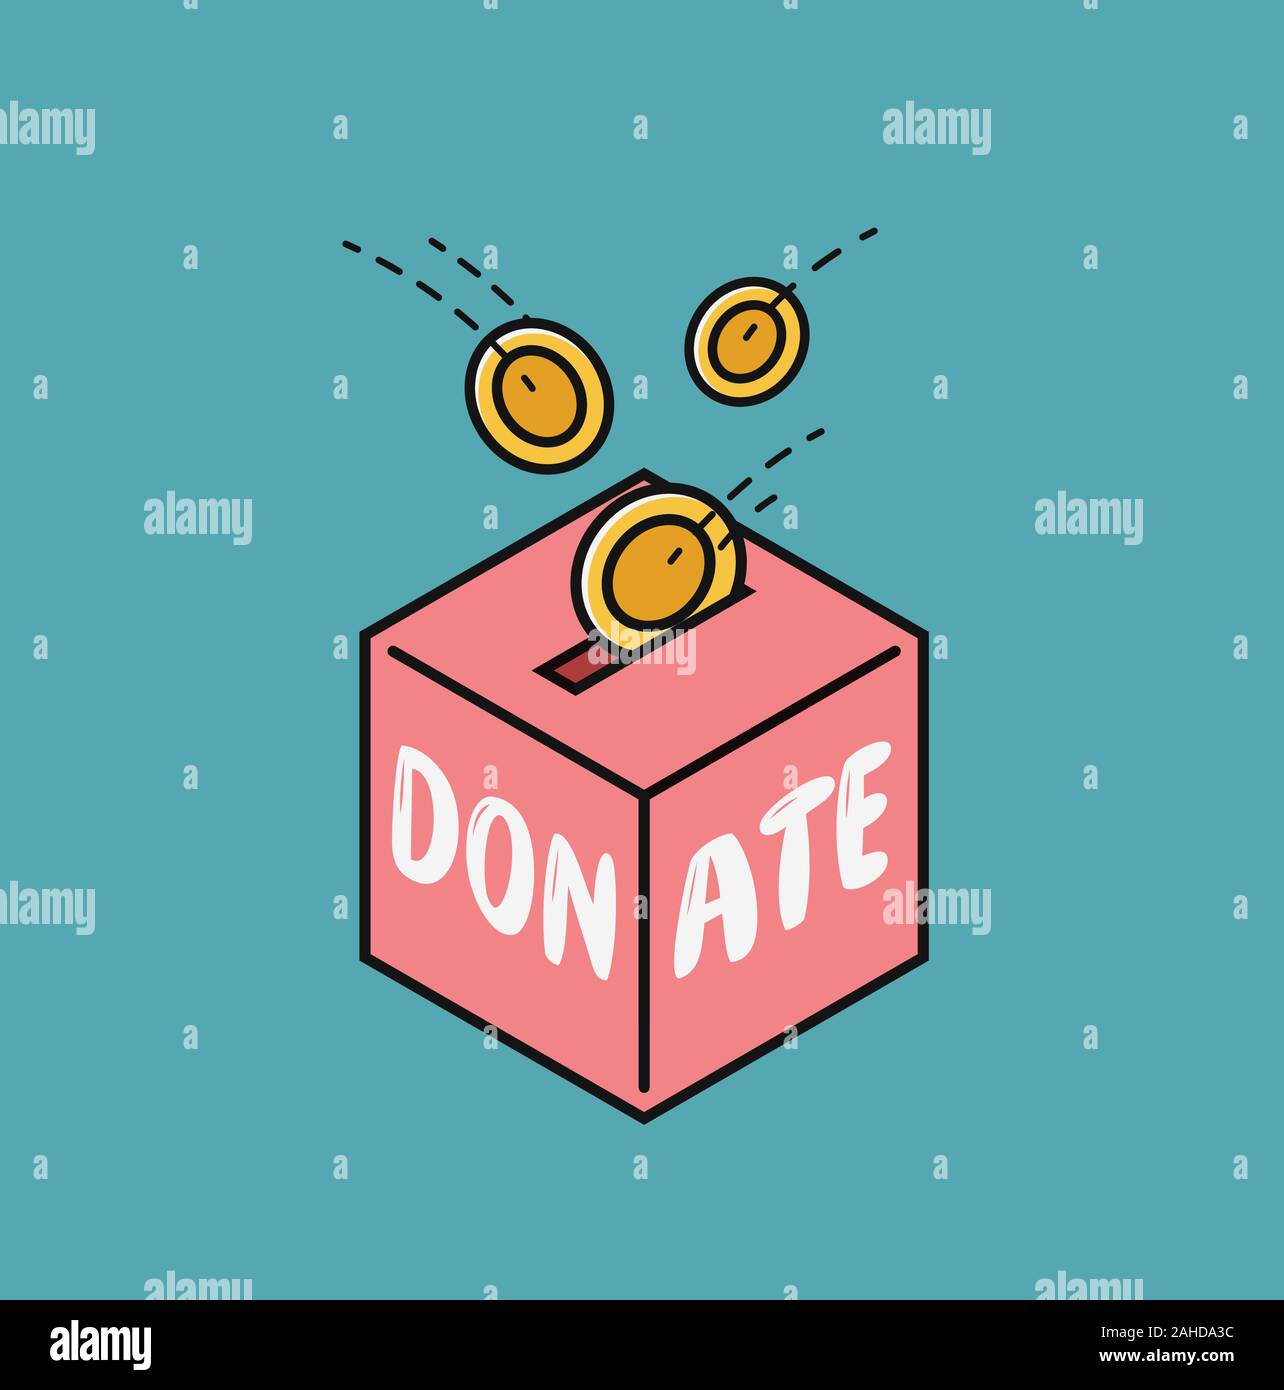 Donate, finance symbol. Fundraising in donation box vector Stock Vector